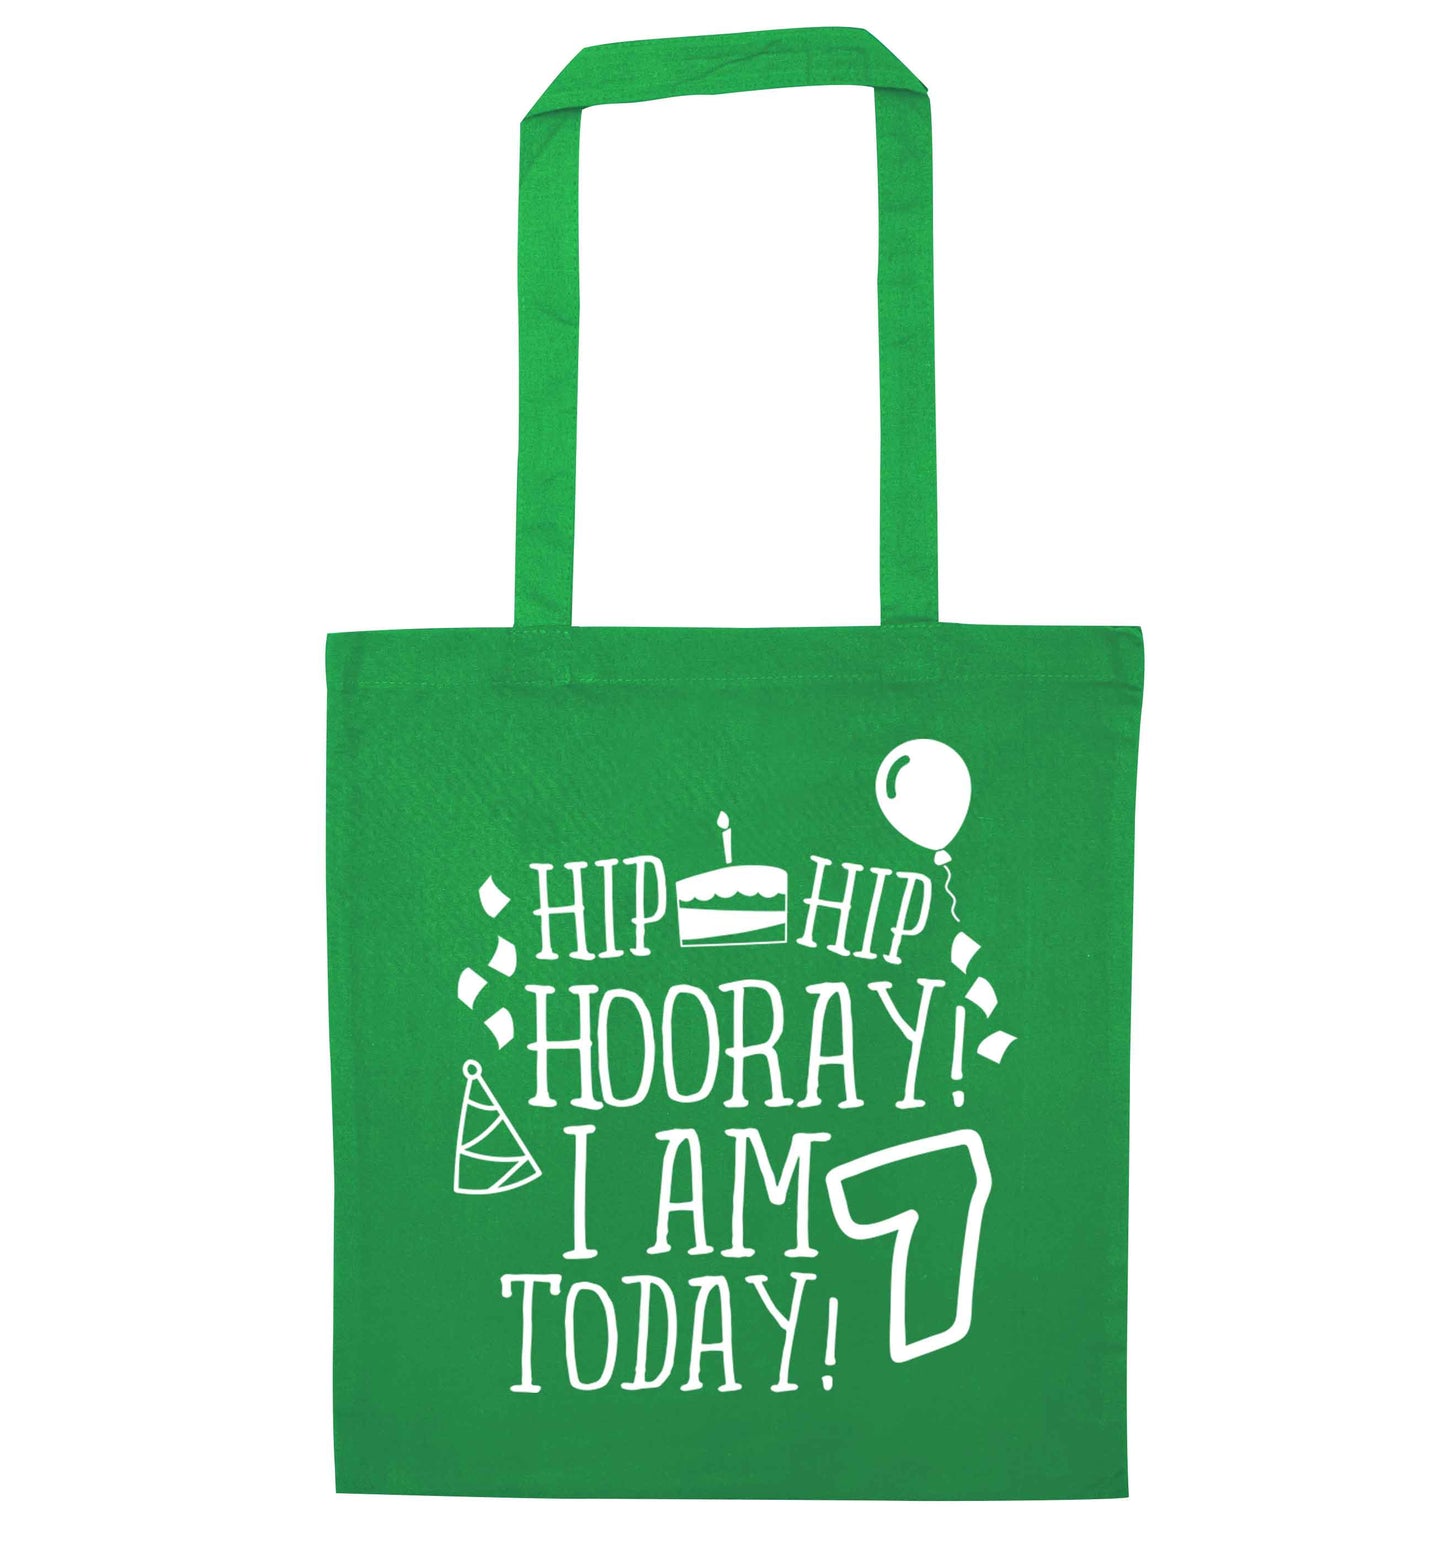 Hip hip I am seven today! green tote bag